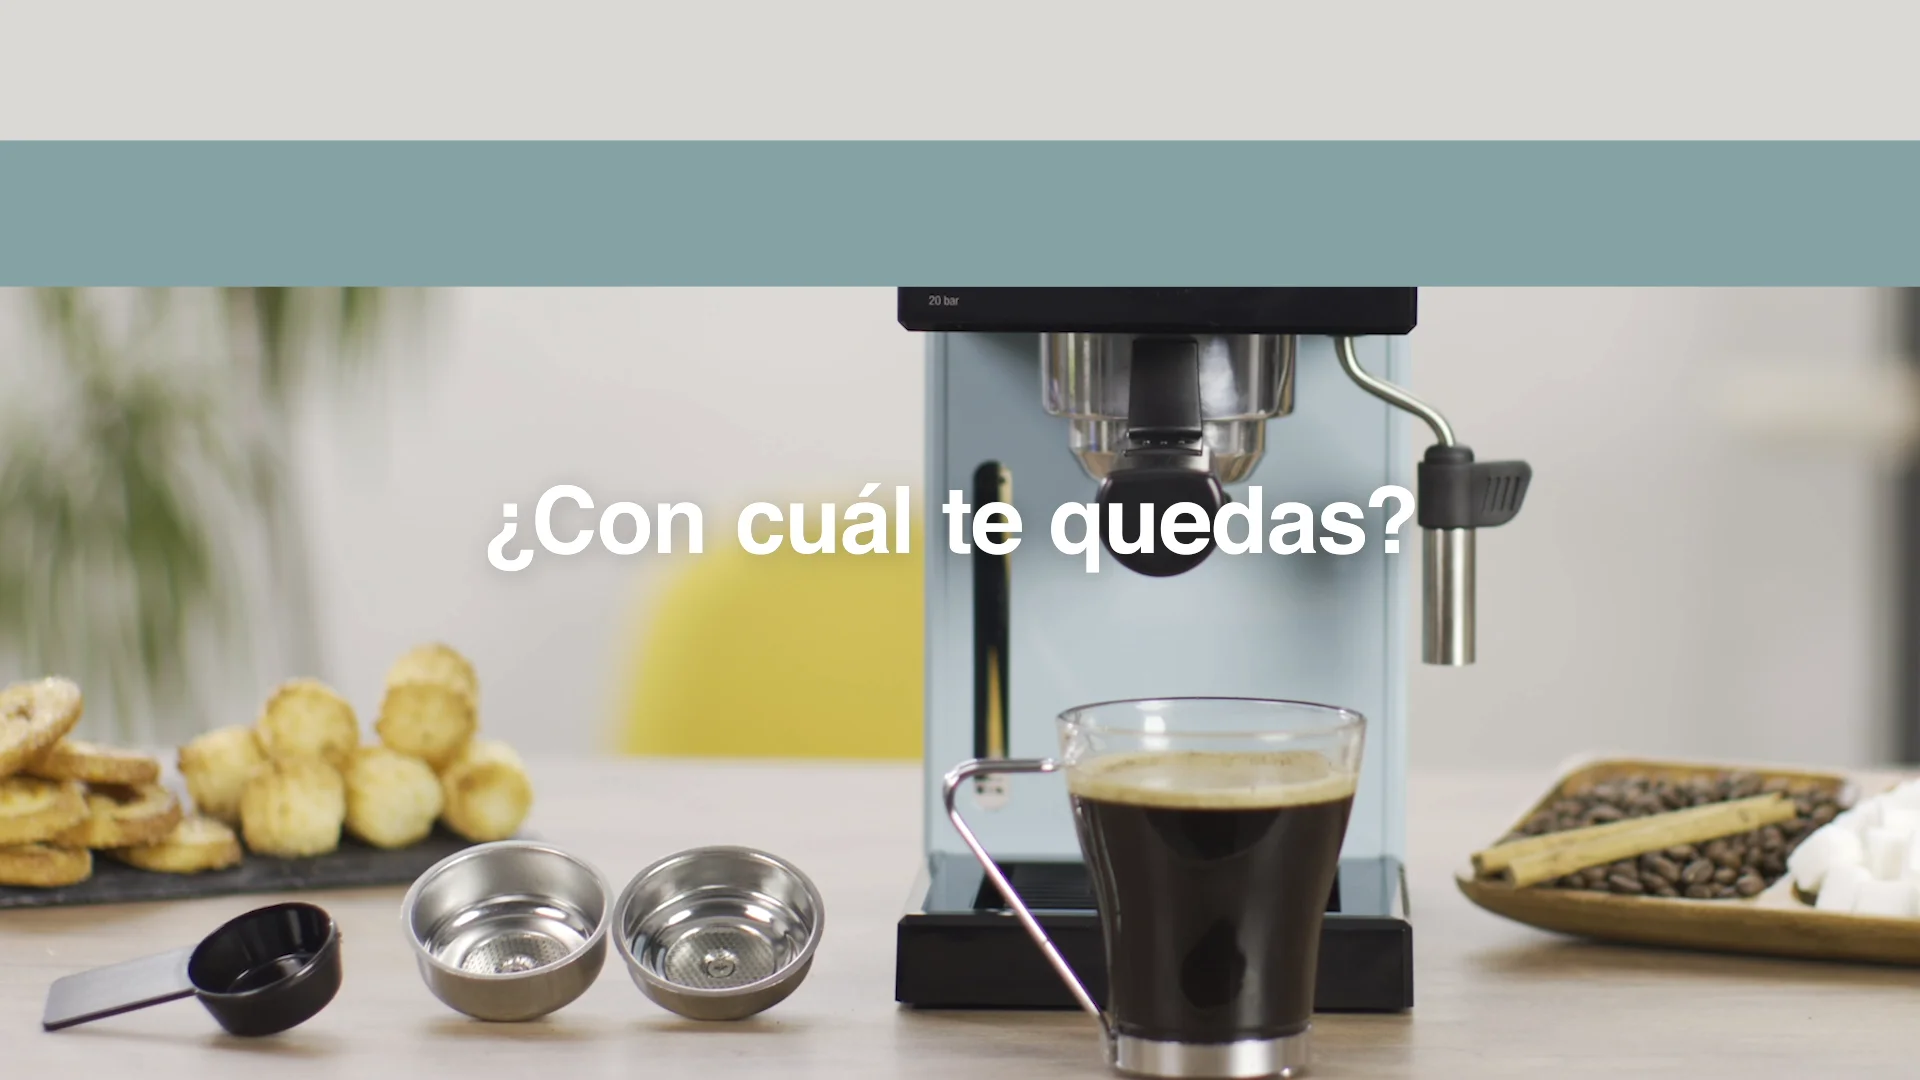 Cafetera espresso Squissita Intelligent 19 Bar de Solac on Vimeo